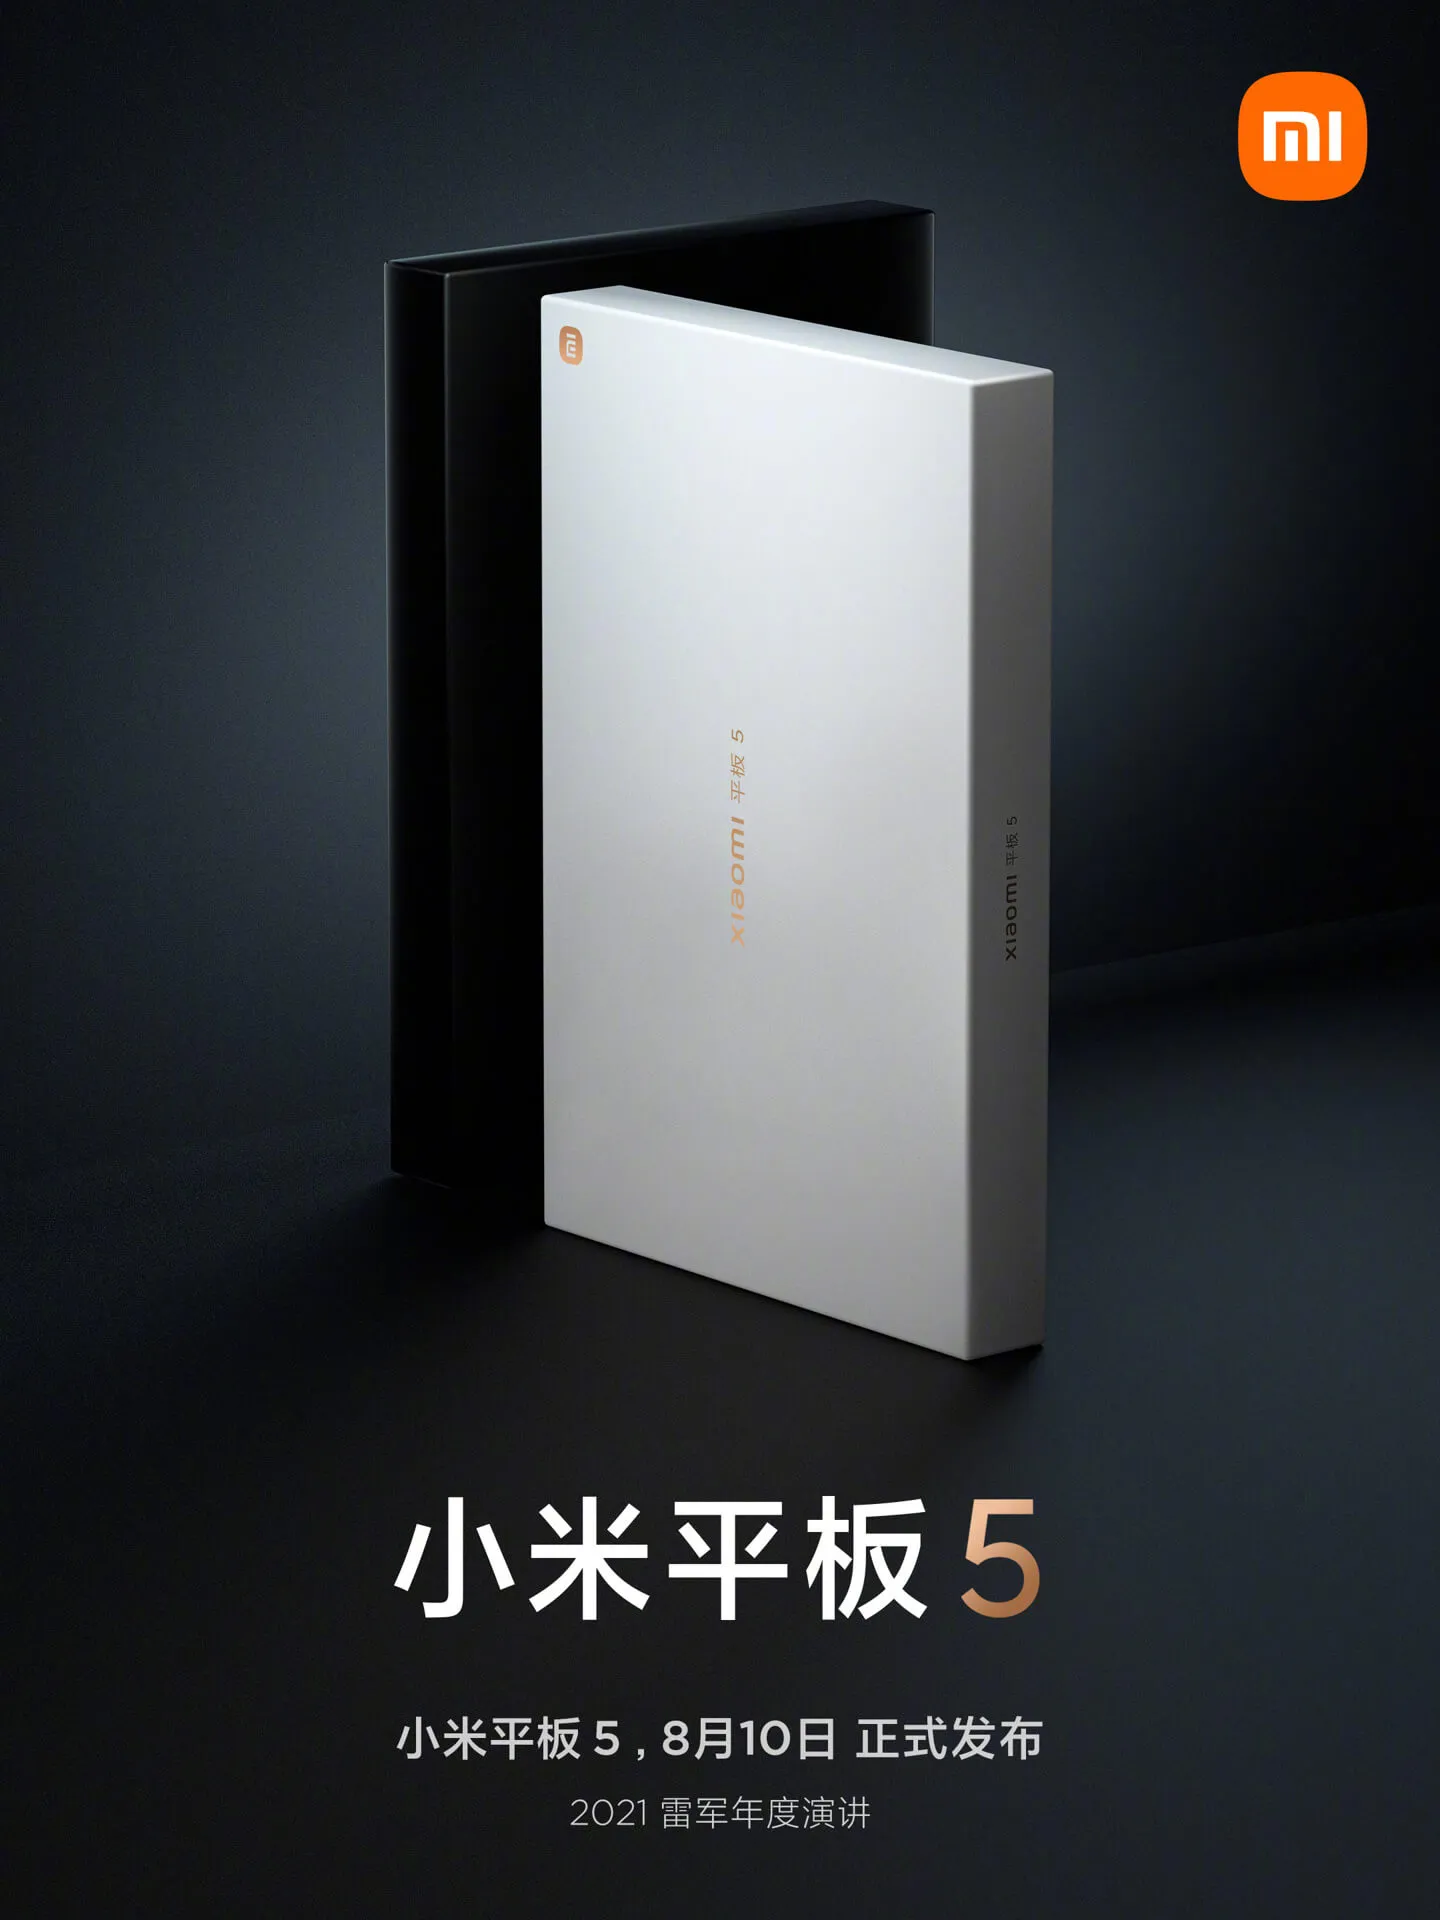 Xiaomi tablet 5